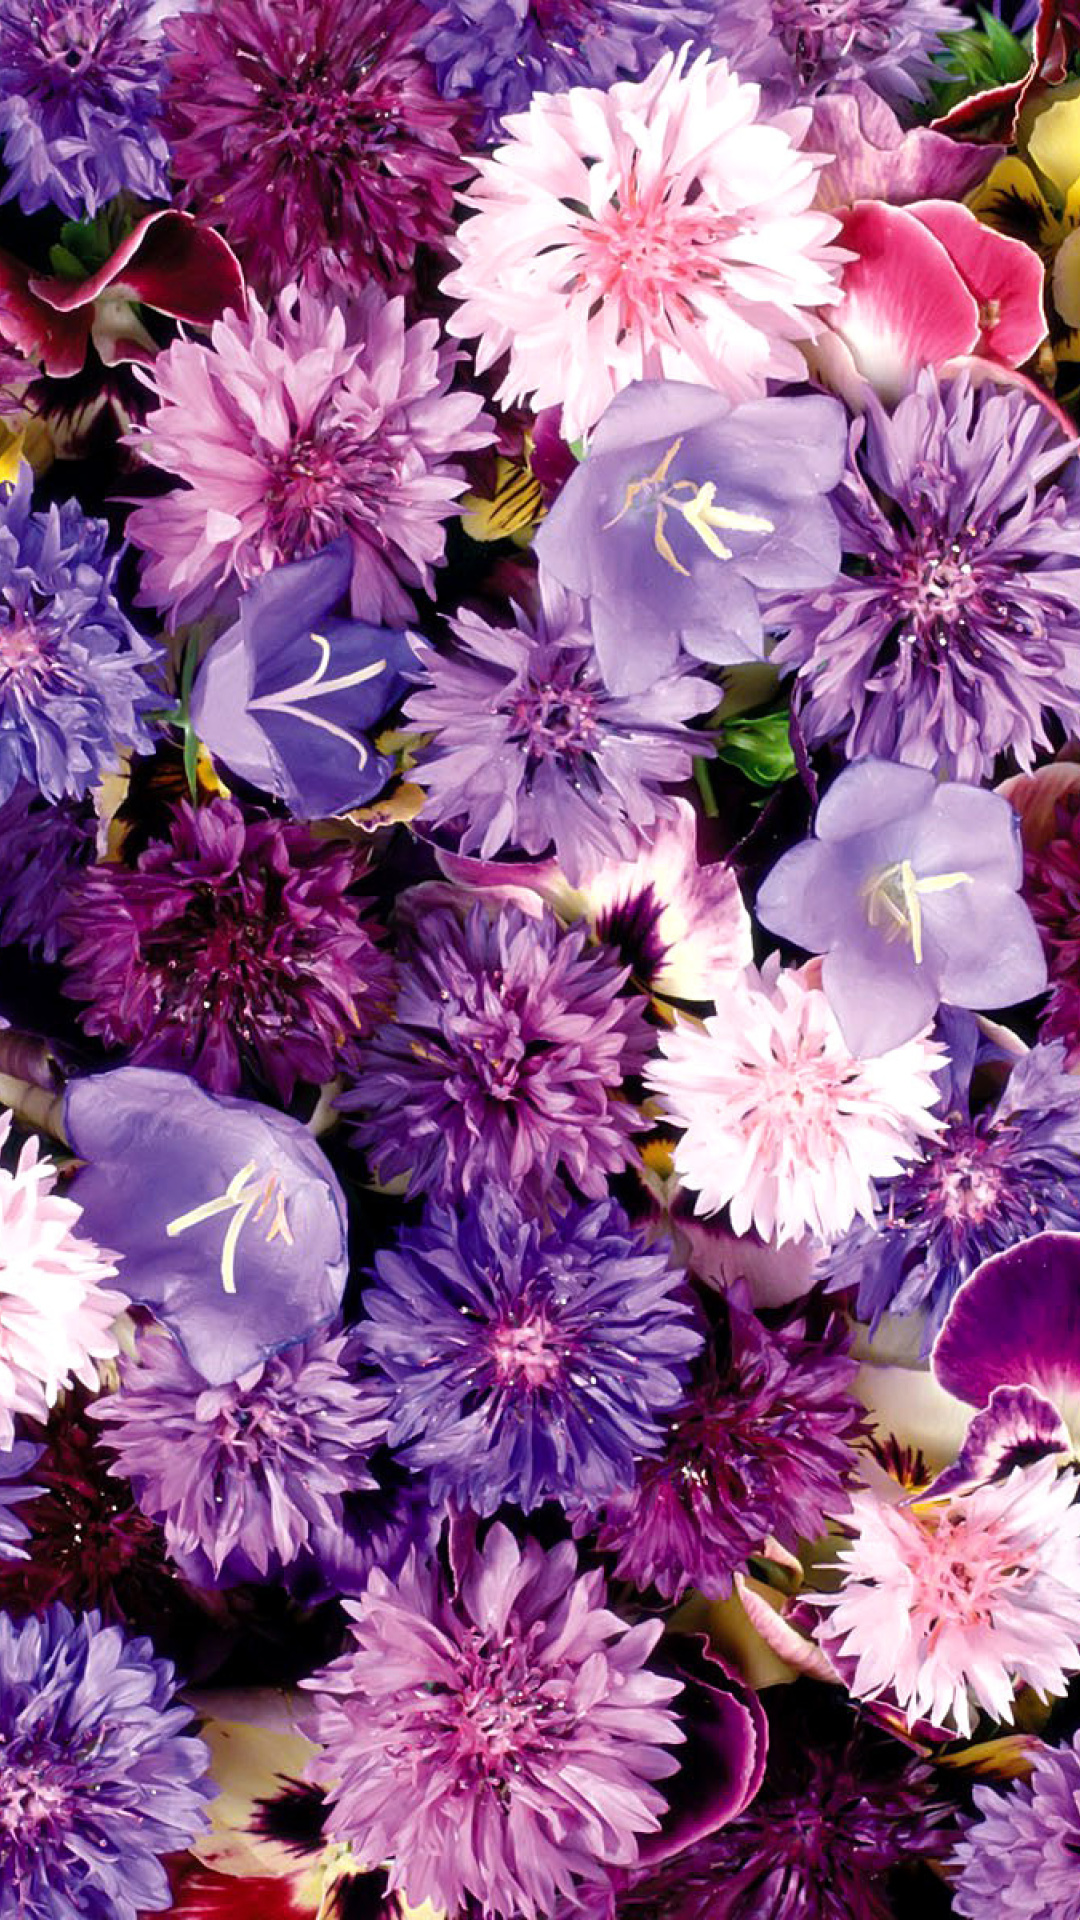 Flower carpet from cornflowers, bluebells, violets screenshot #1 1080x1920